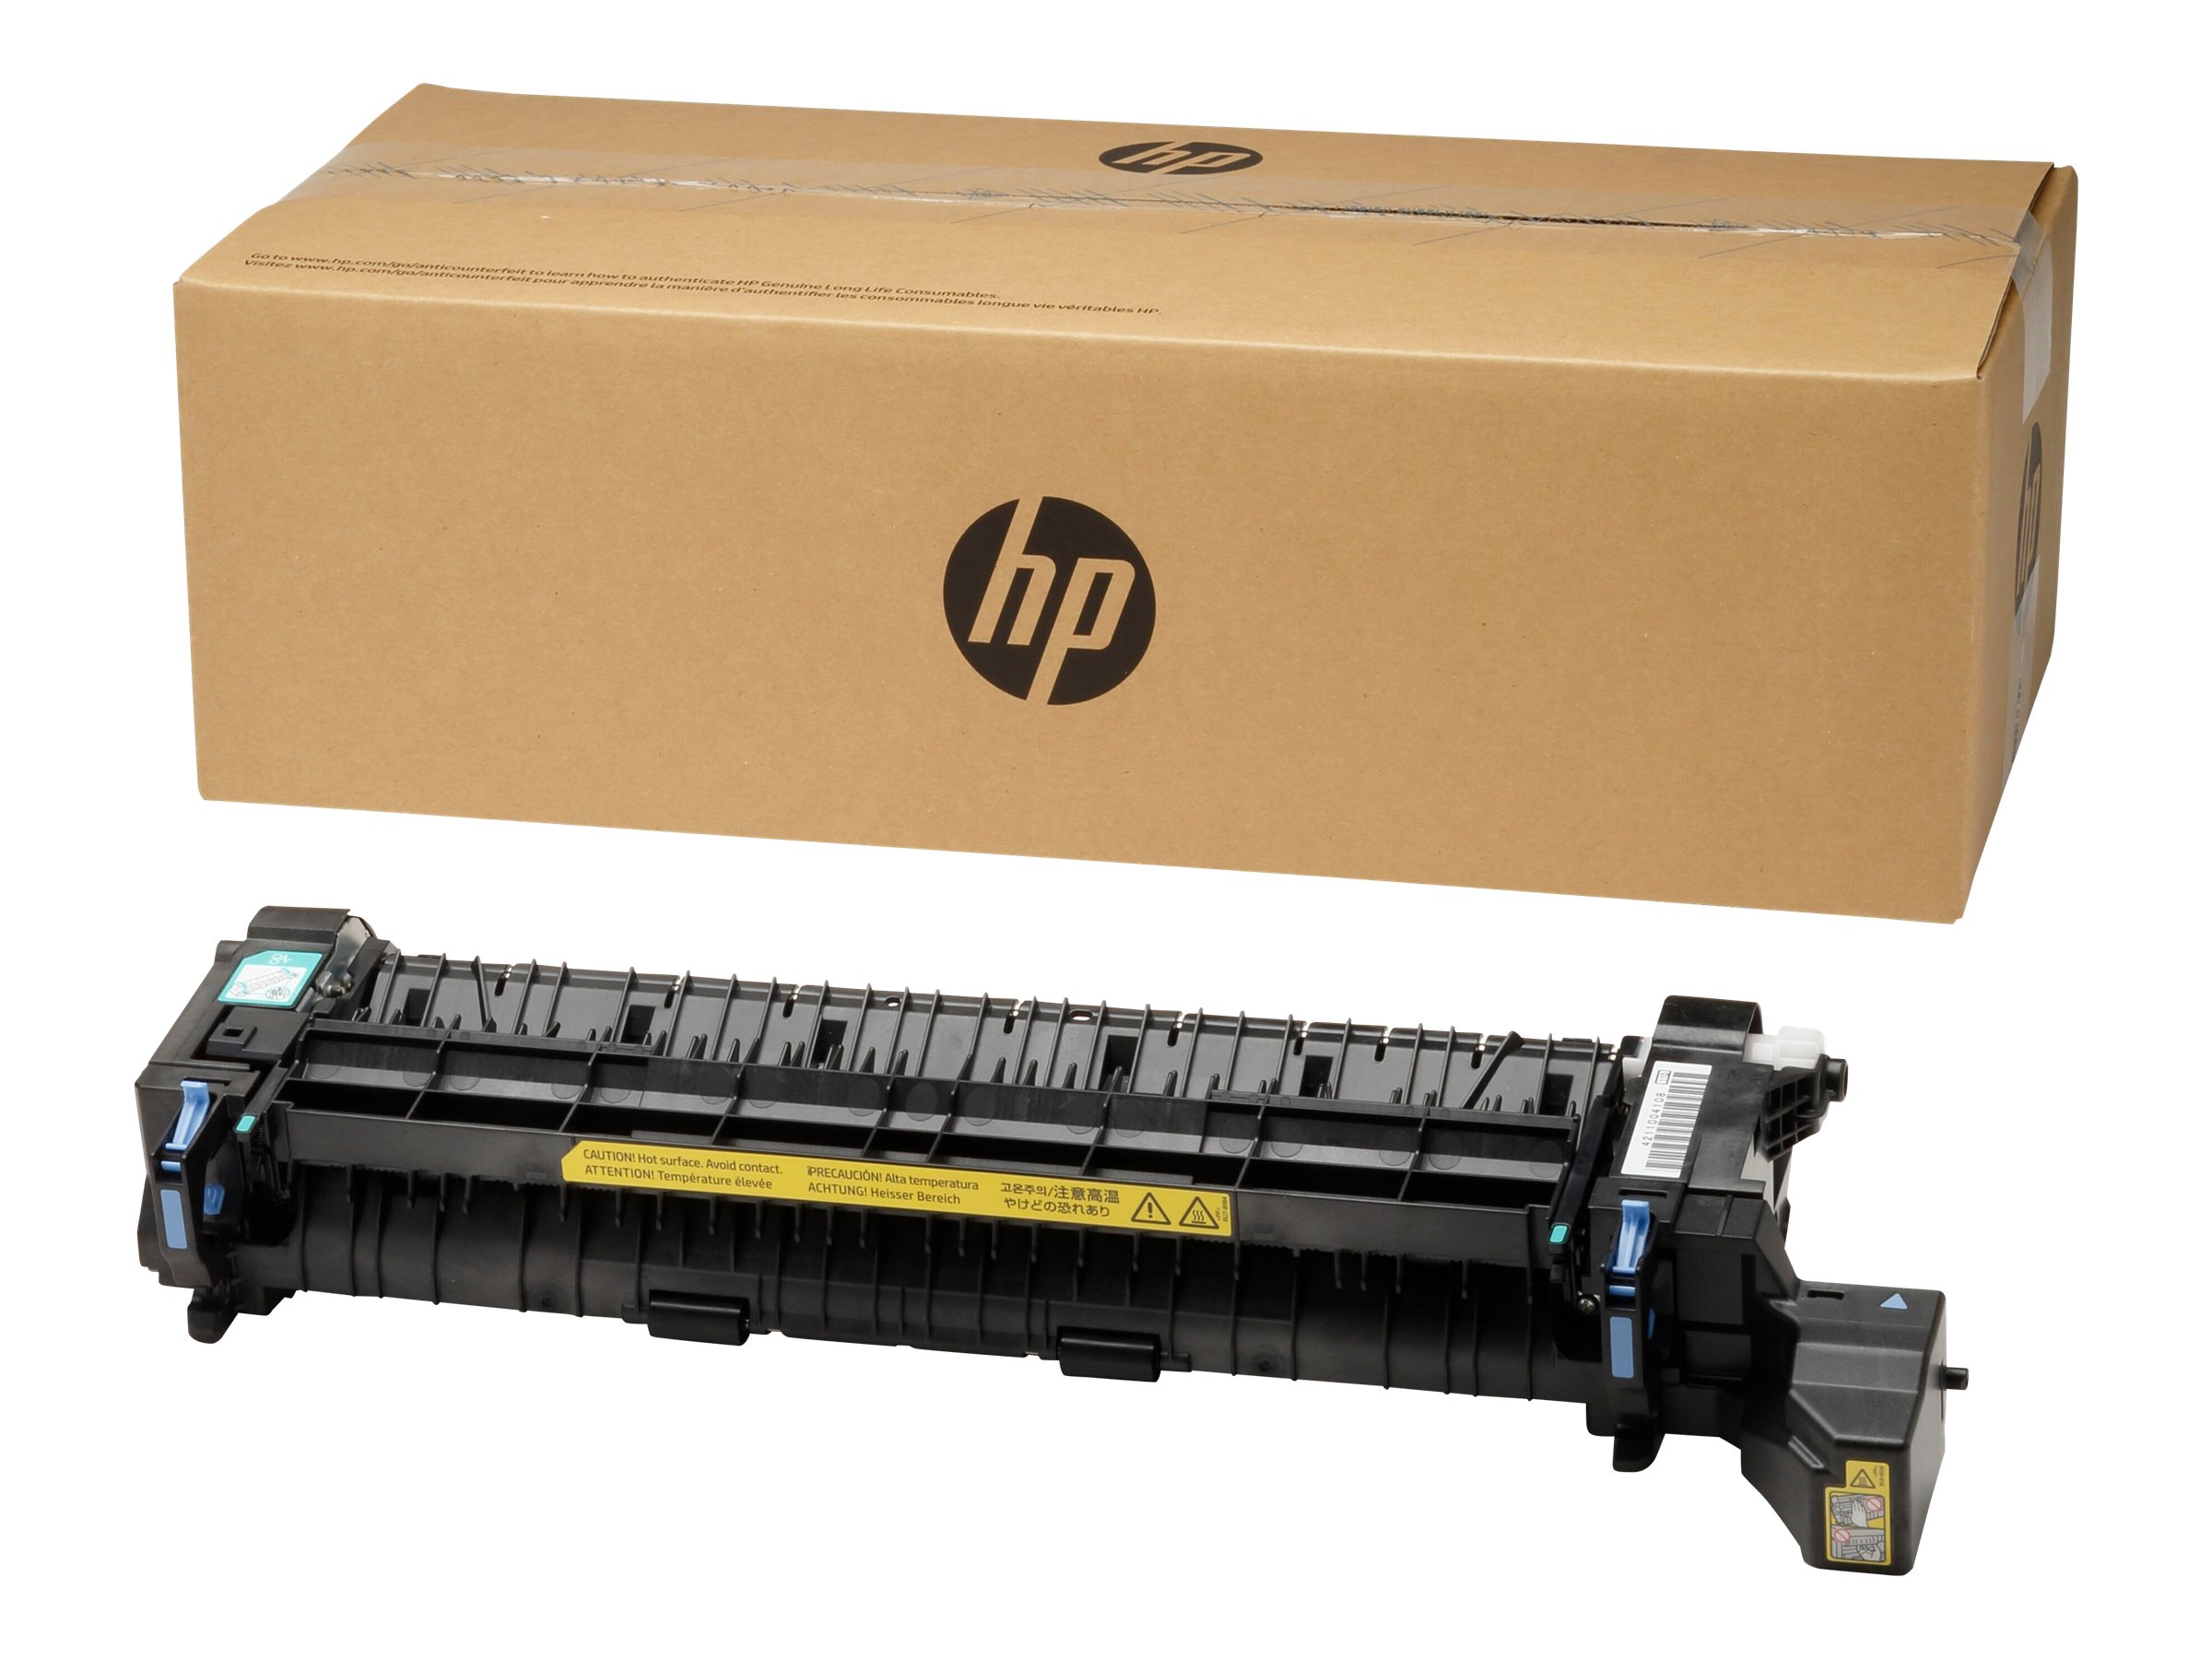 HP - (110 V) - Kit für Fixiereinheit - für Color LaserJet Enterprise M751dn, M751n